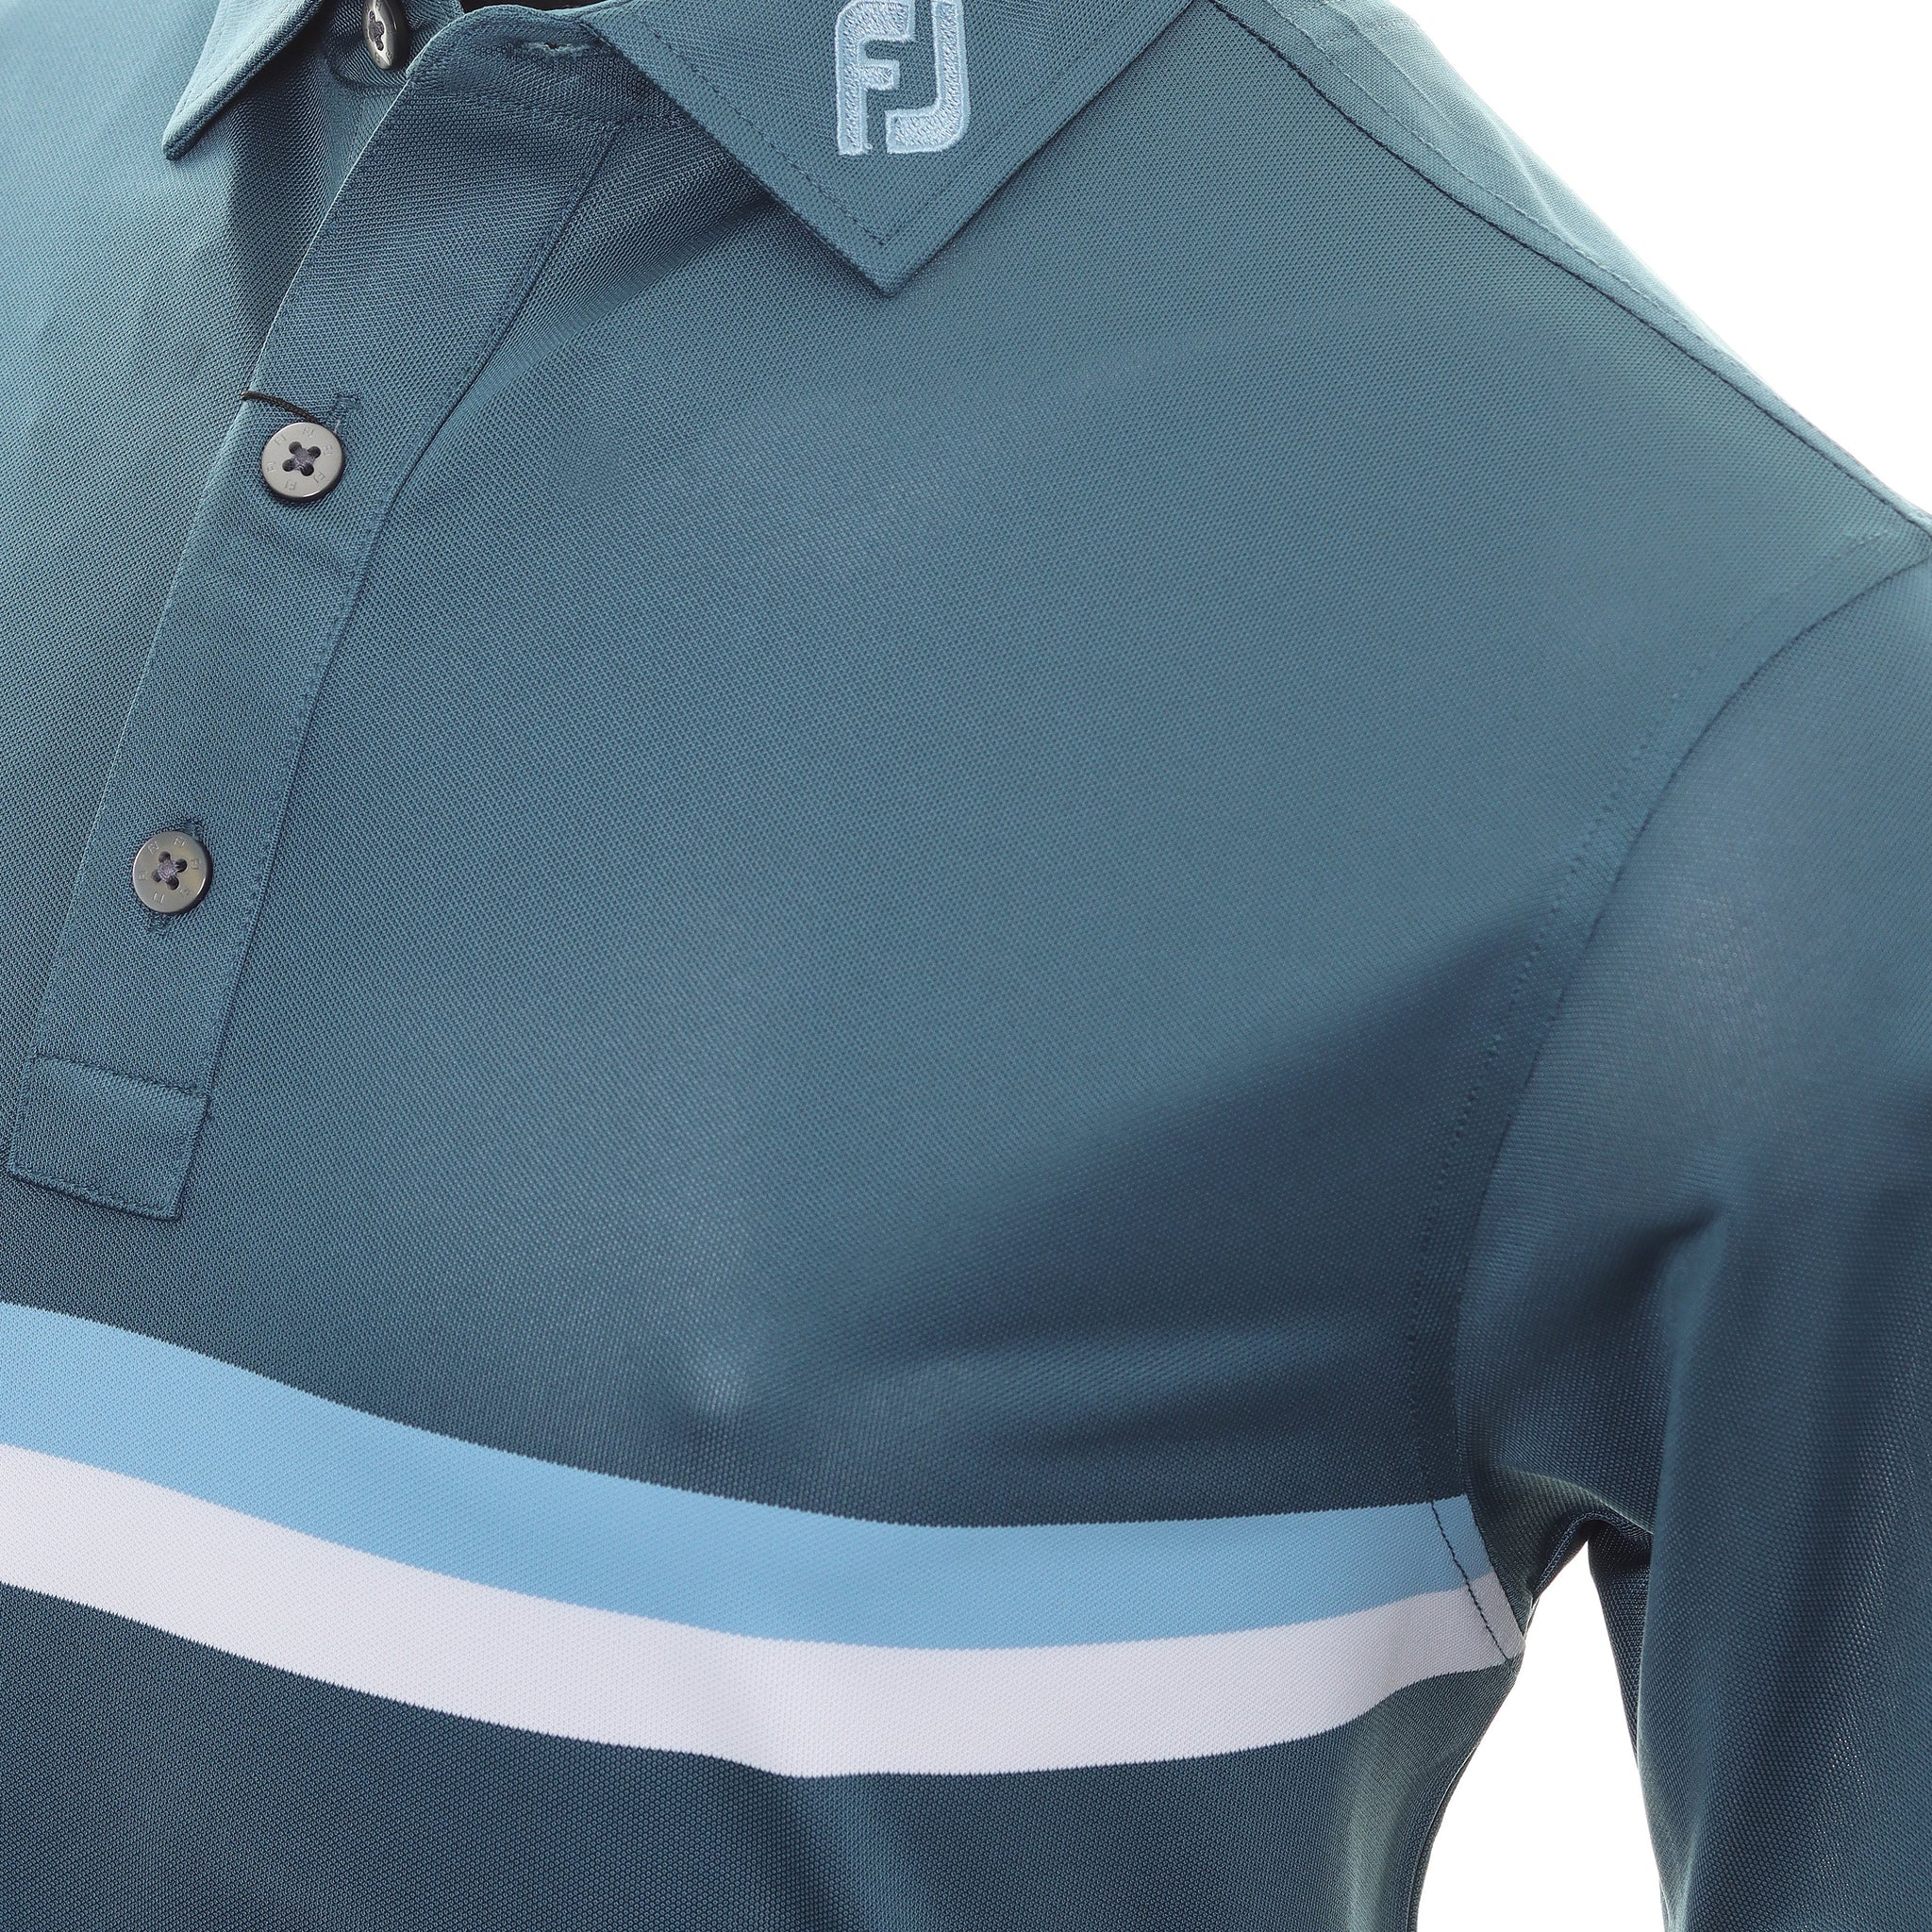 footjoy-double-chest-band-pique-golf-shirt-88391-ink-dusk-blue-white